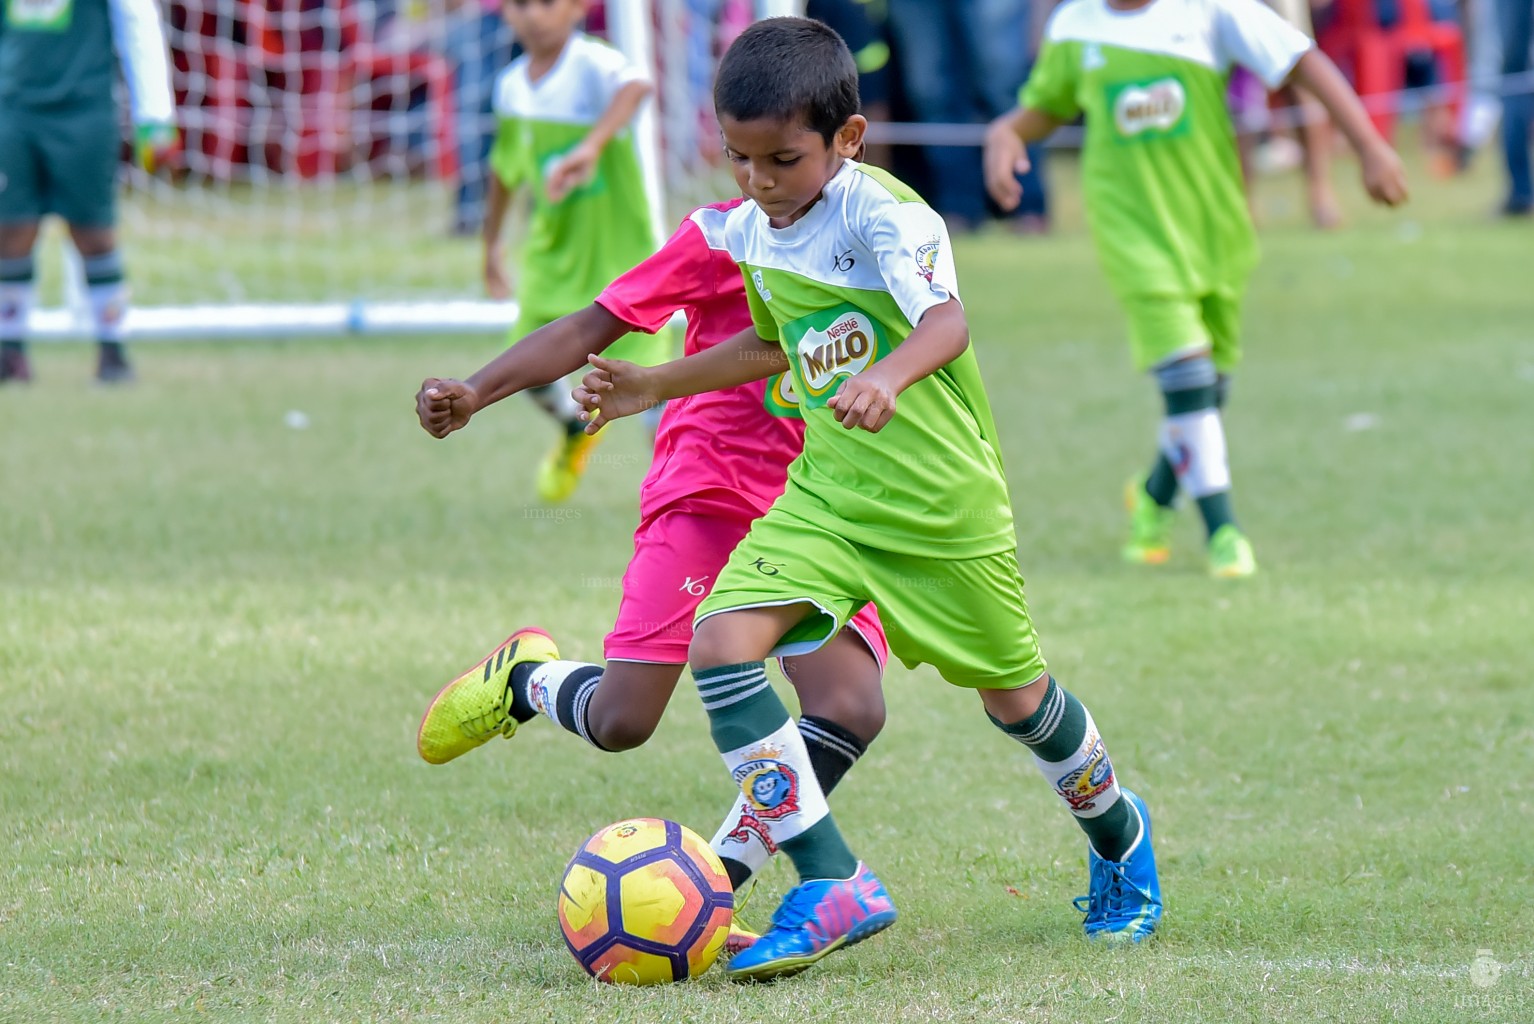 Milo Kids Football Fiesta 2017 Day 2